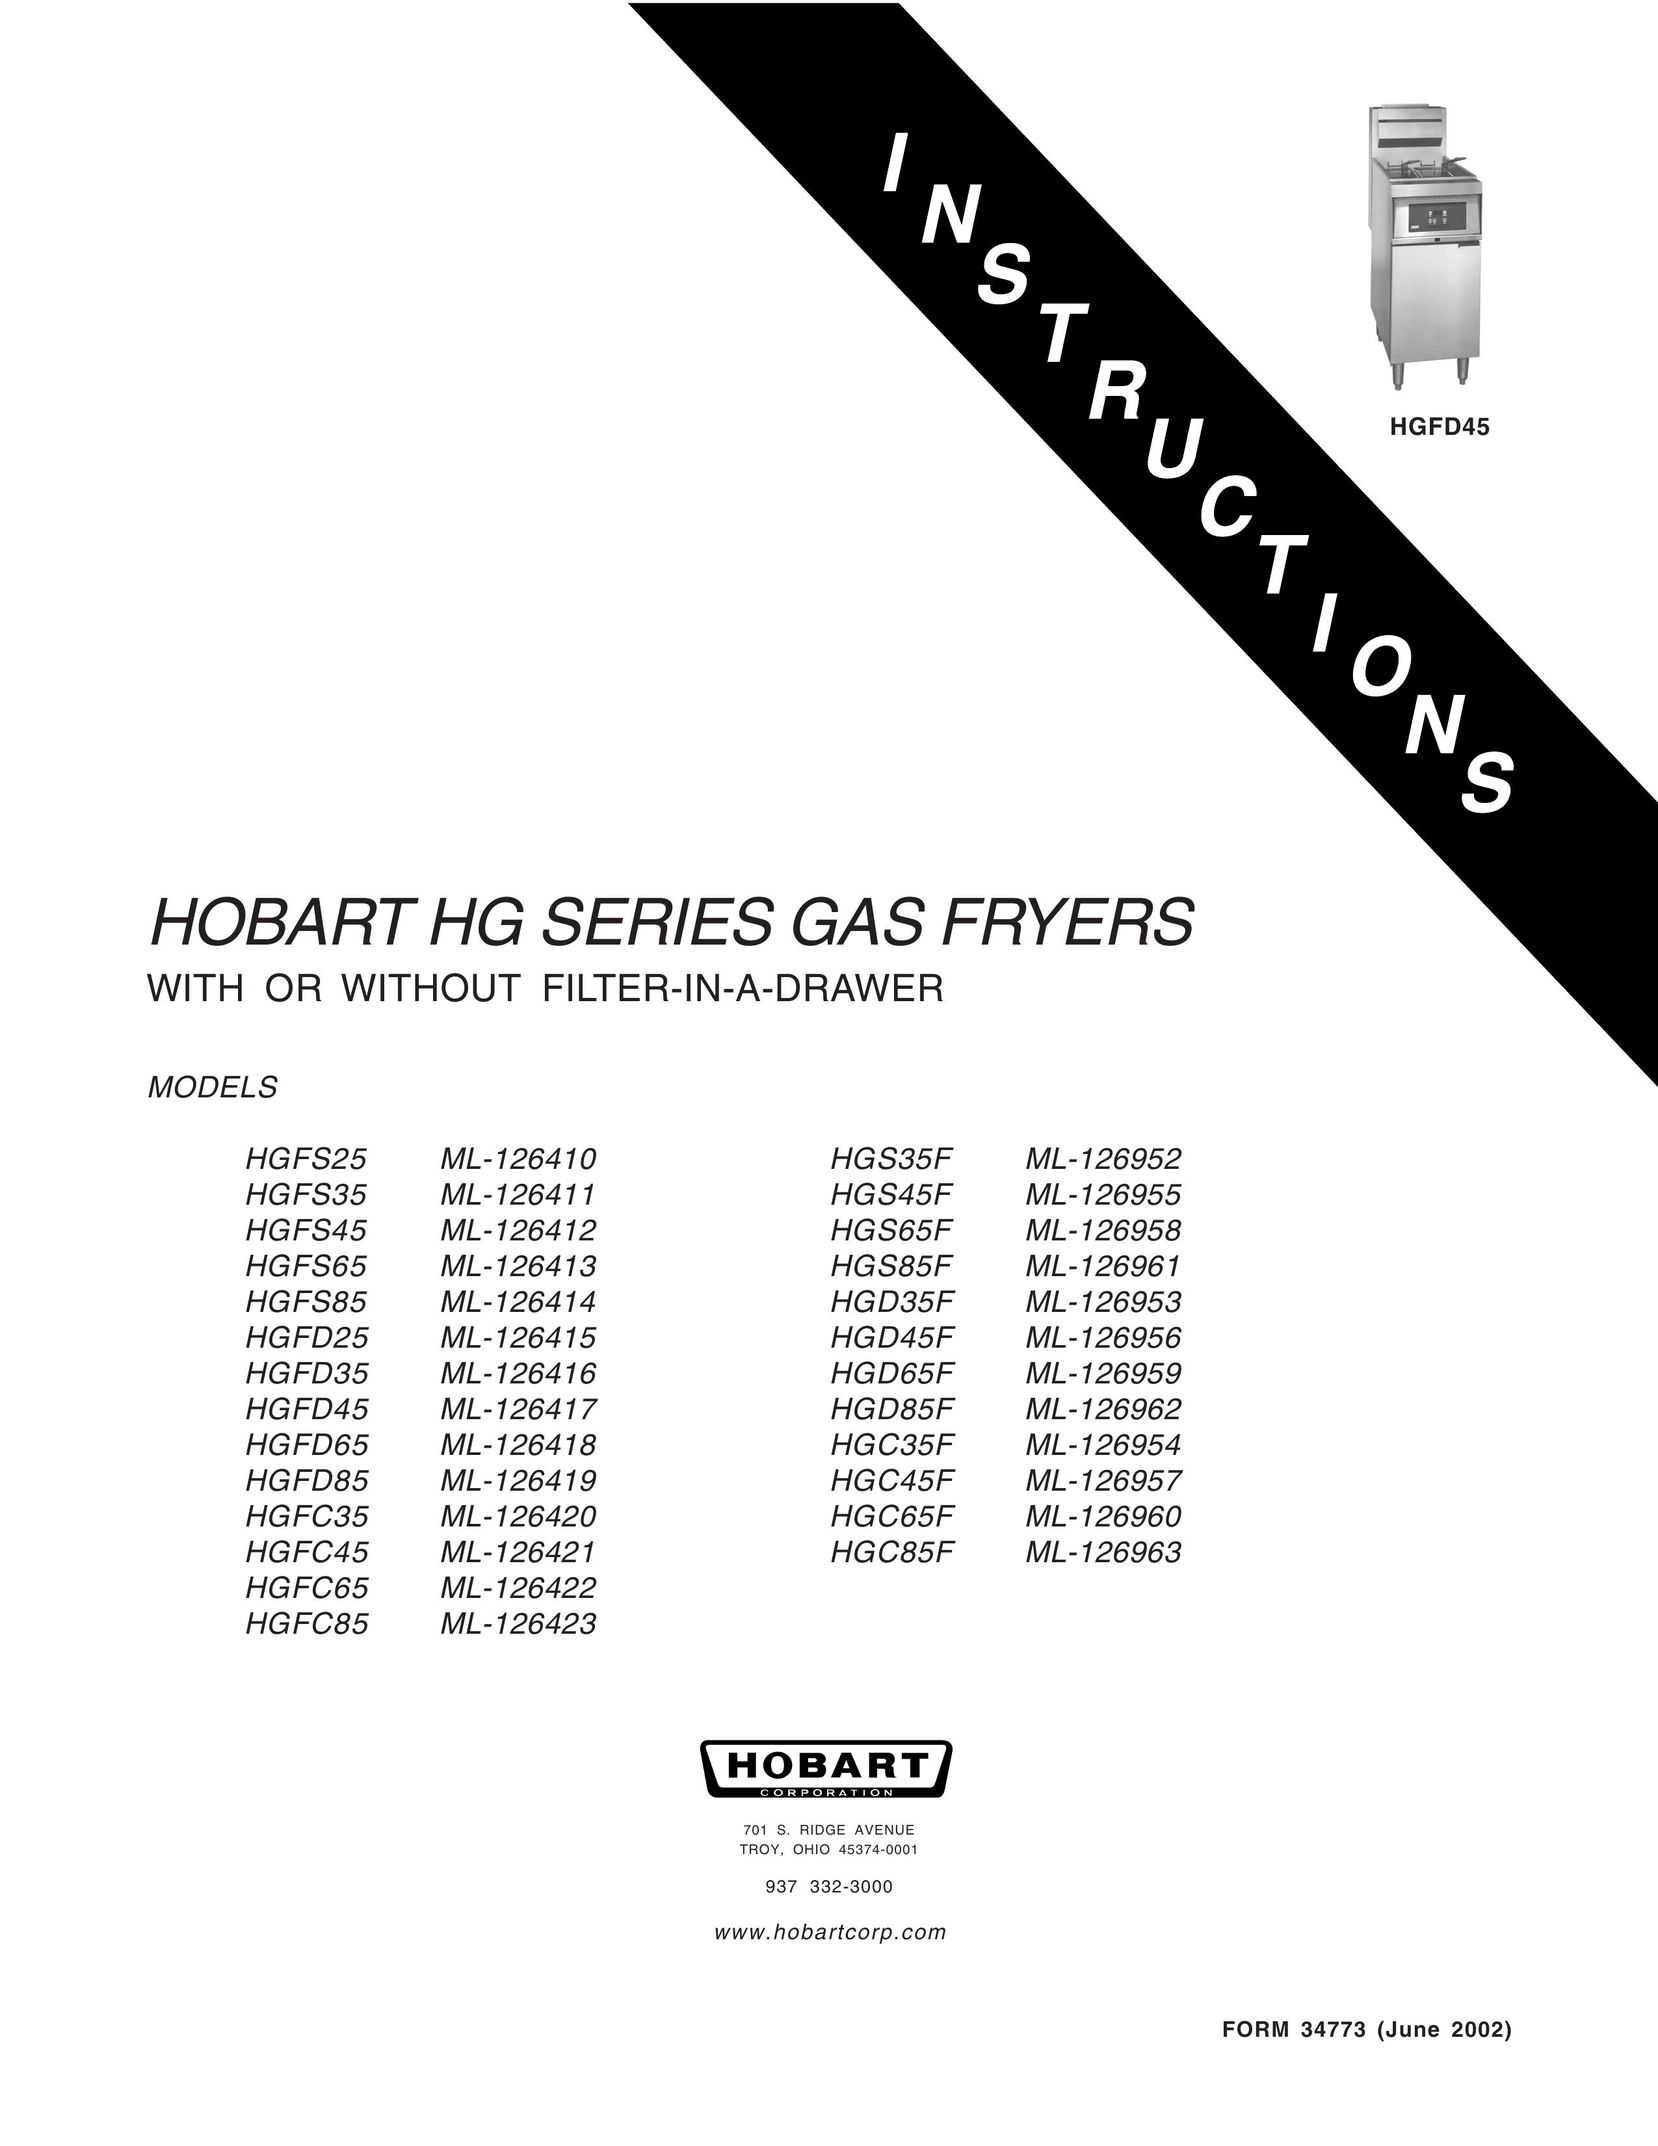 Hobart HGD35F ML-126953 Fryer User Manual